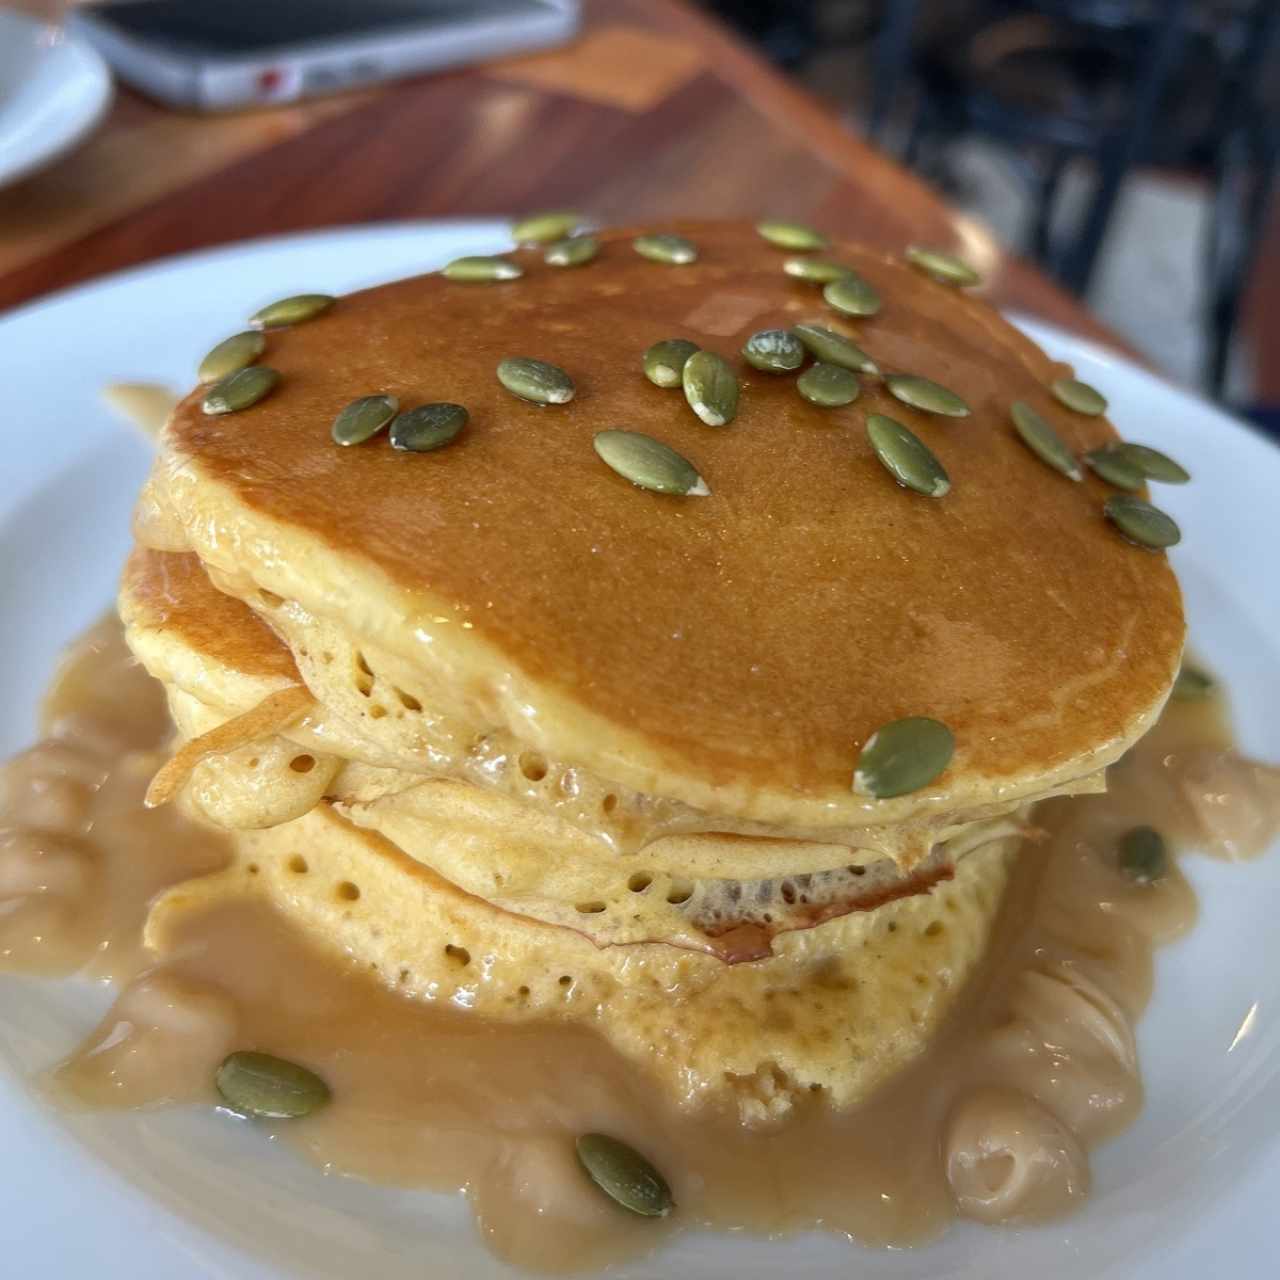 Desayunos - Pumpkin Pancakes